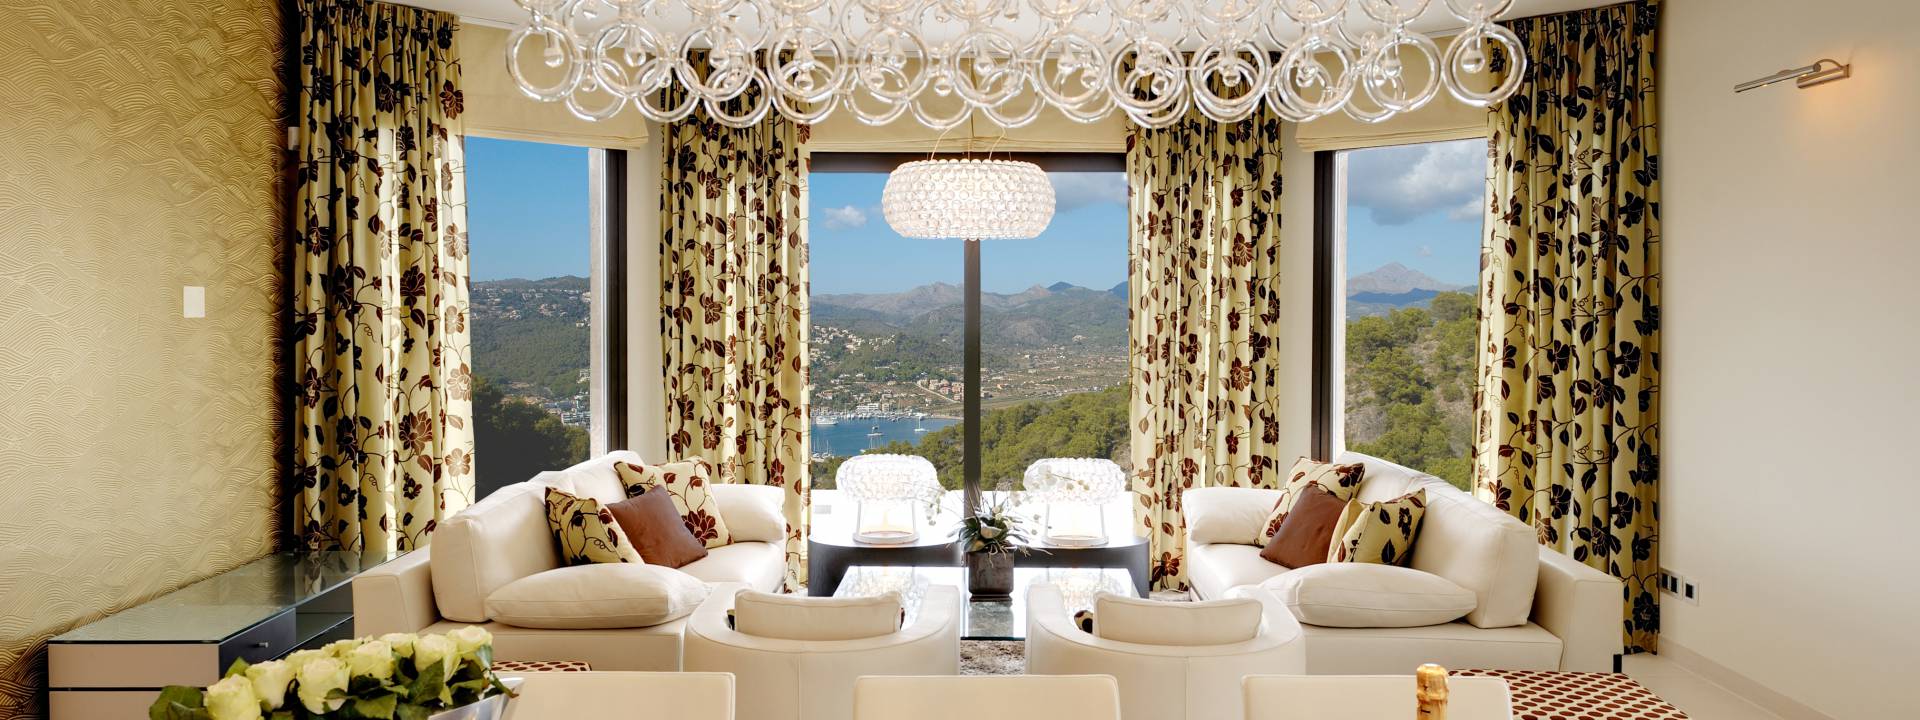 MOdern villa Mallorca - taylor interiors